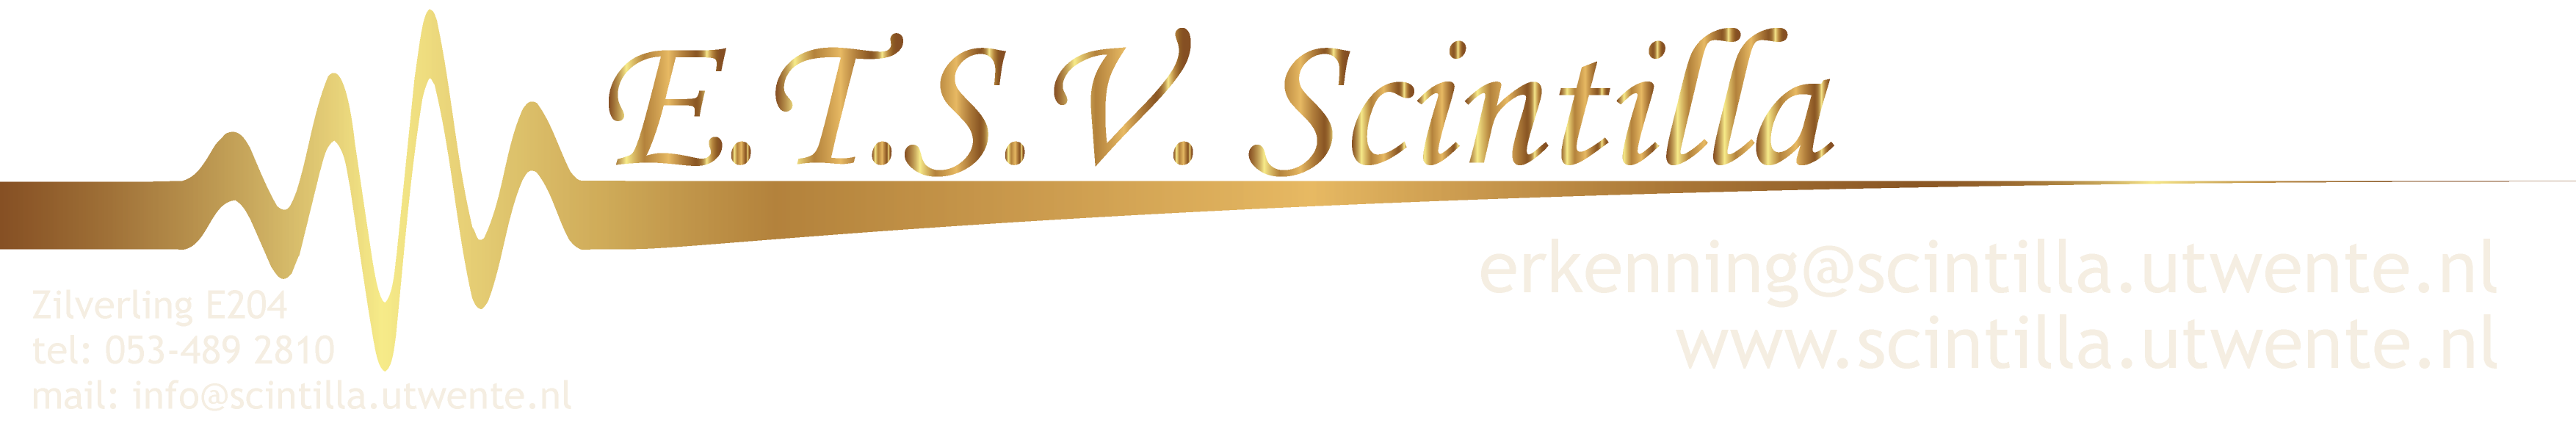 E.T.S.V Scintilla